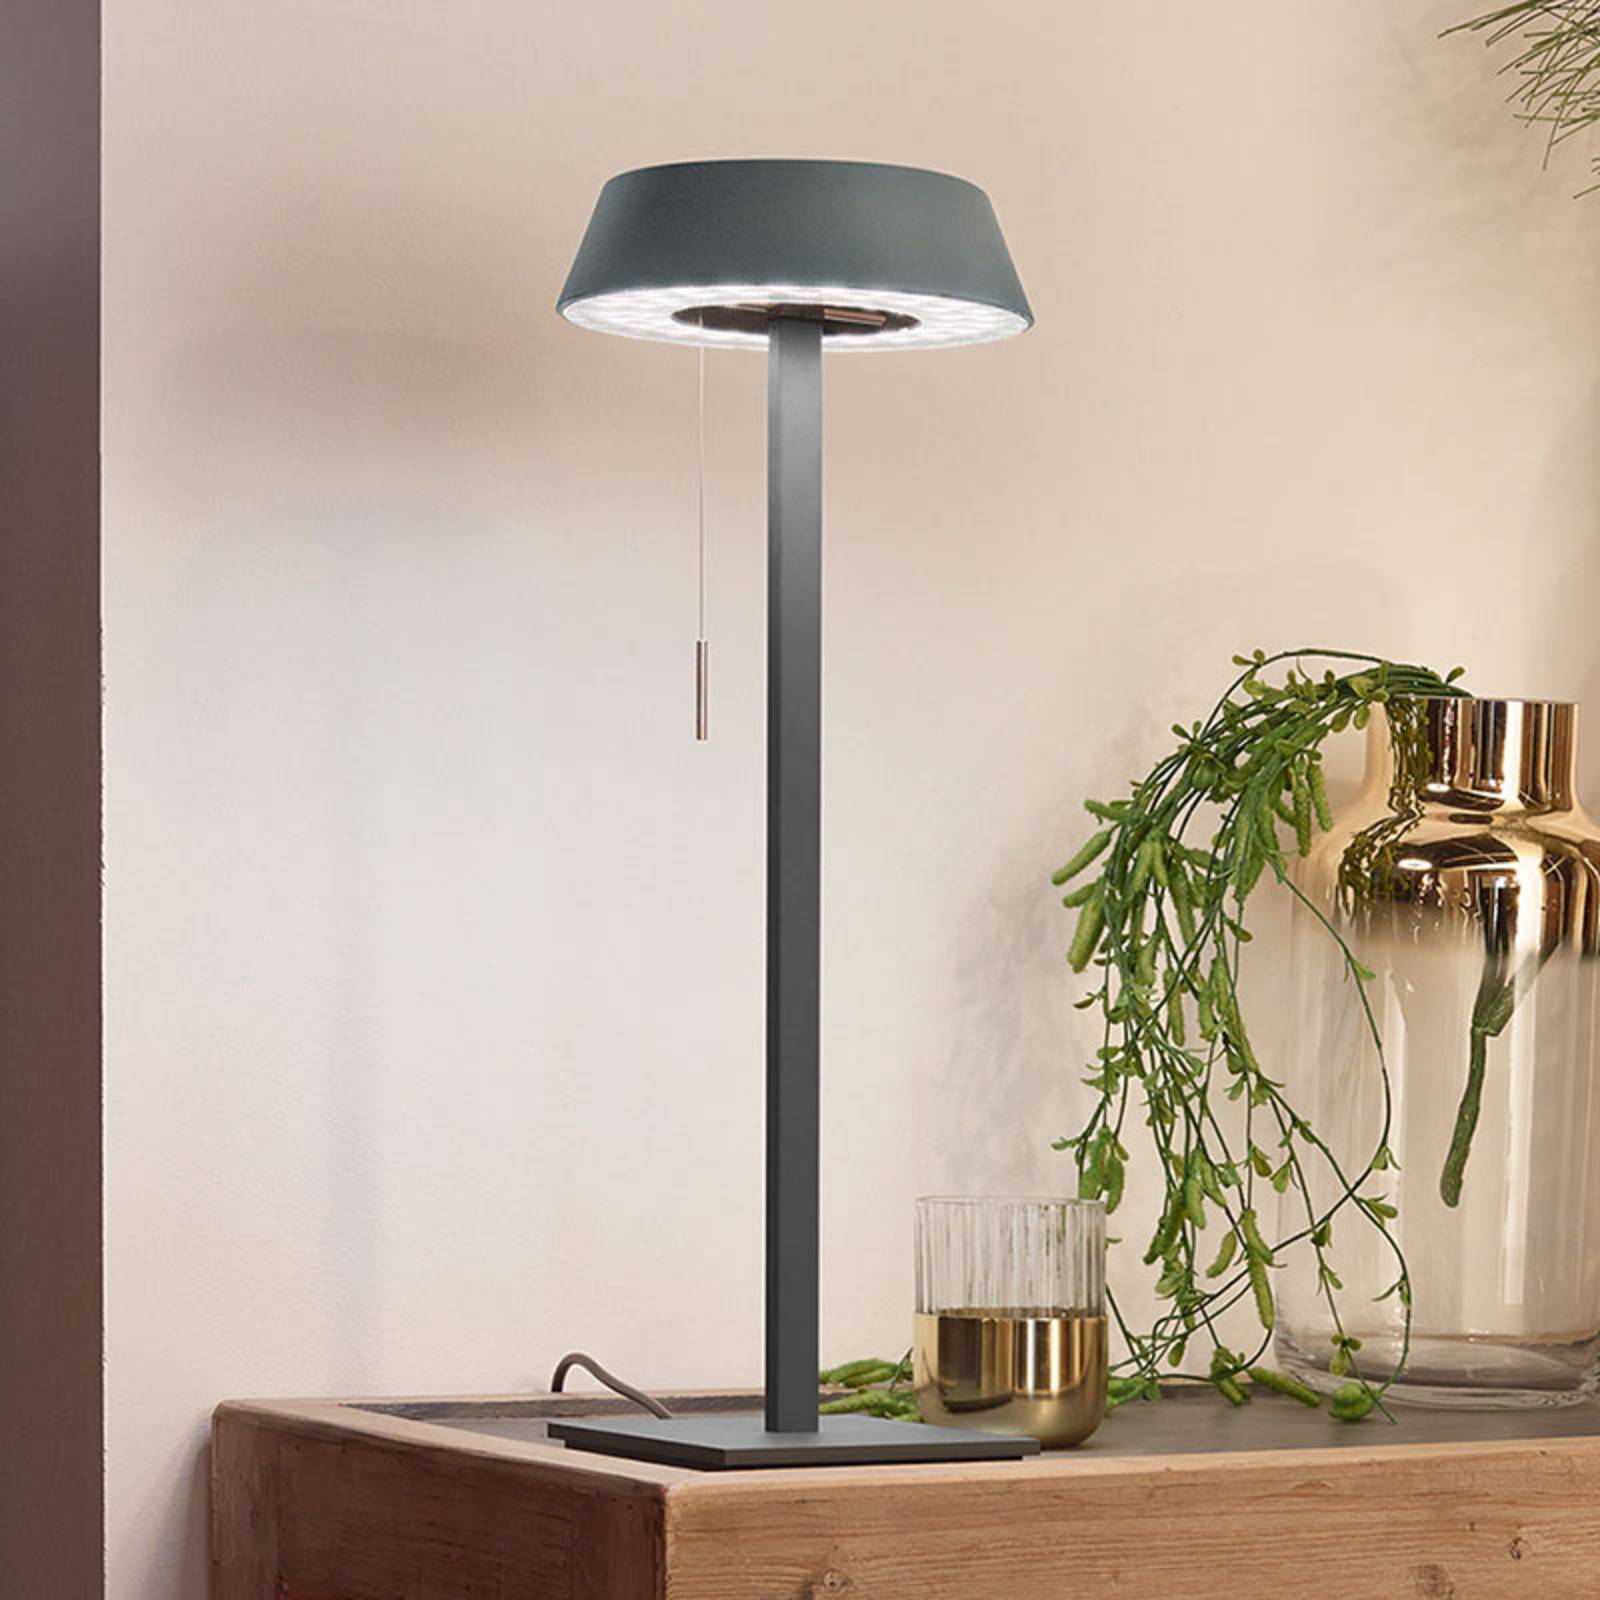 OLIGO Glance lampe à poser LED grise mate